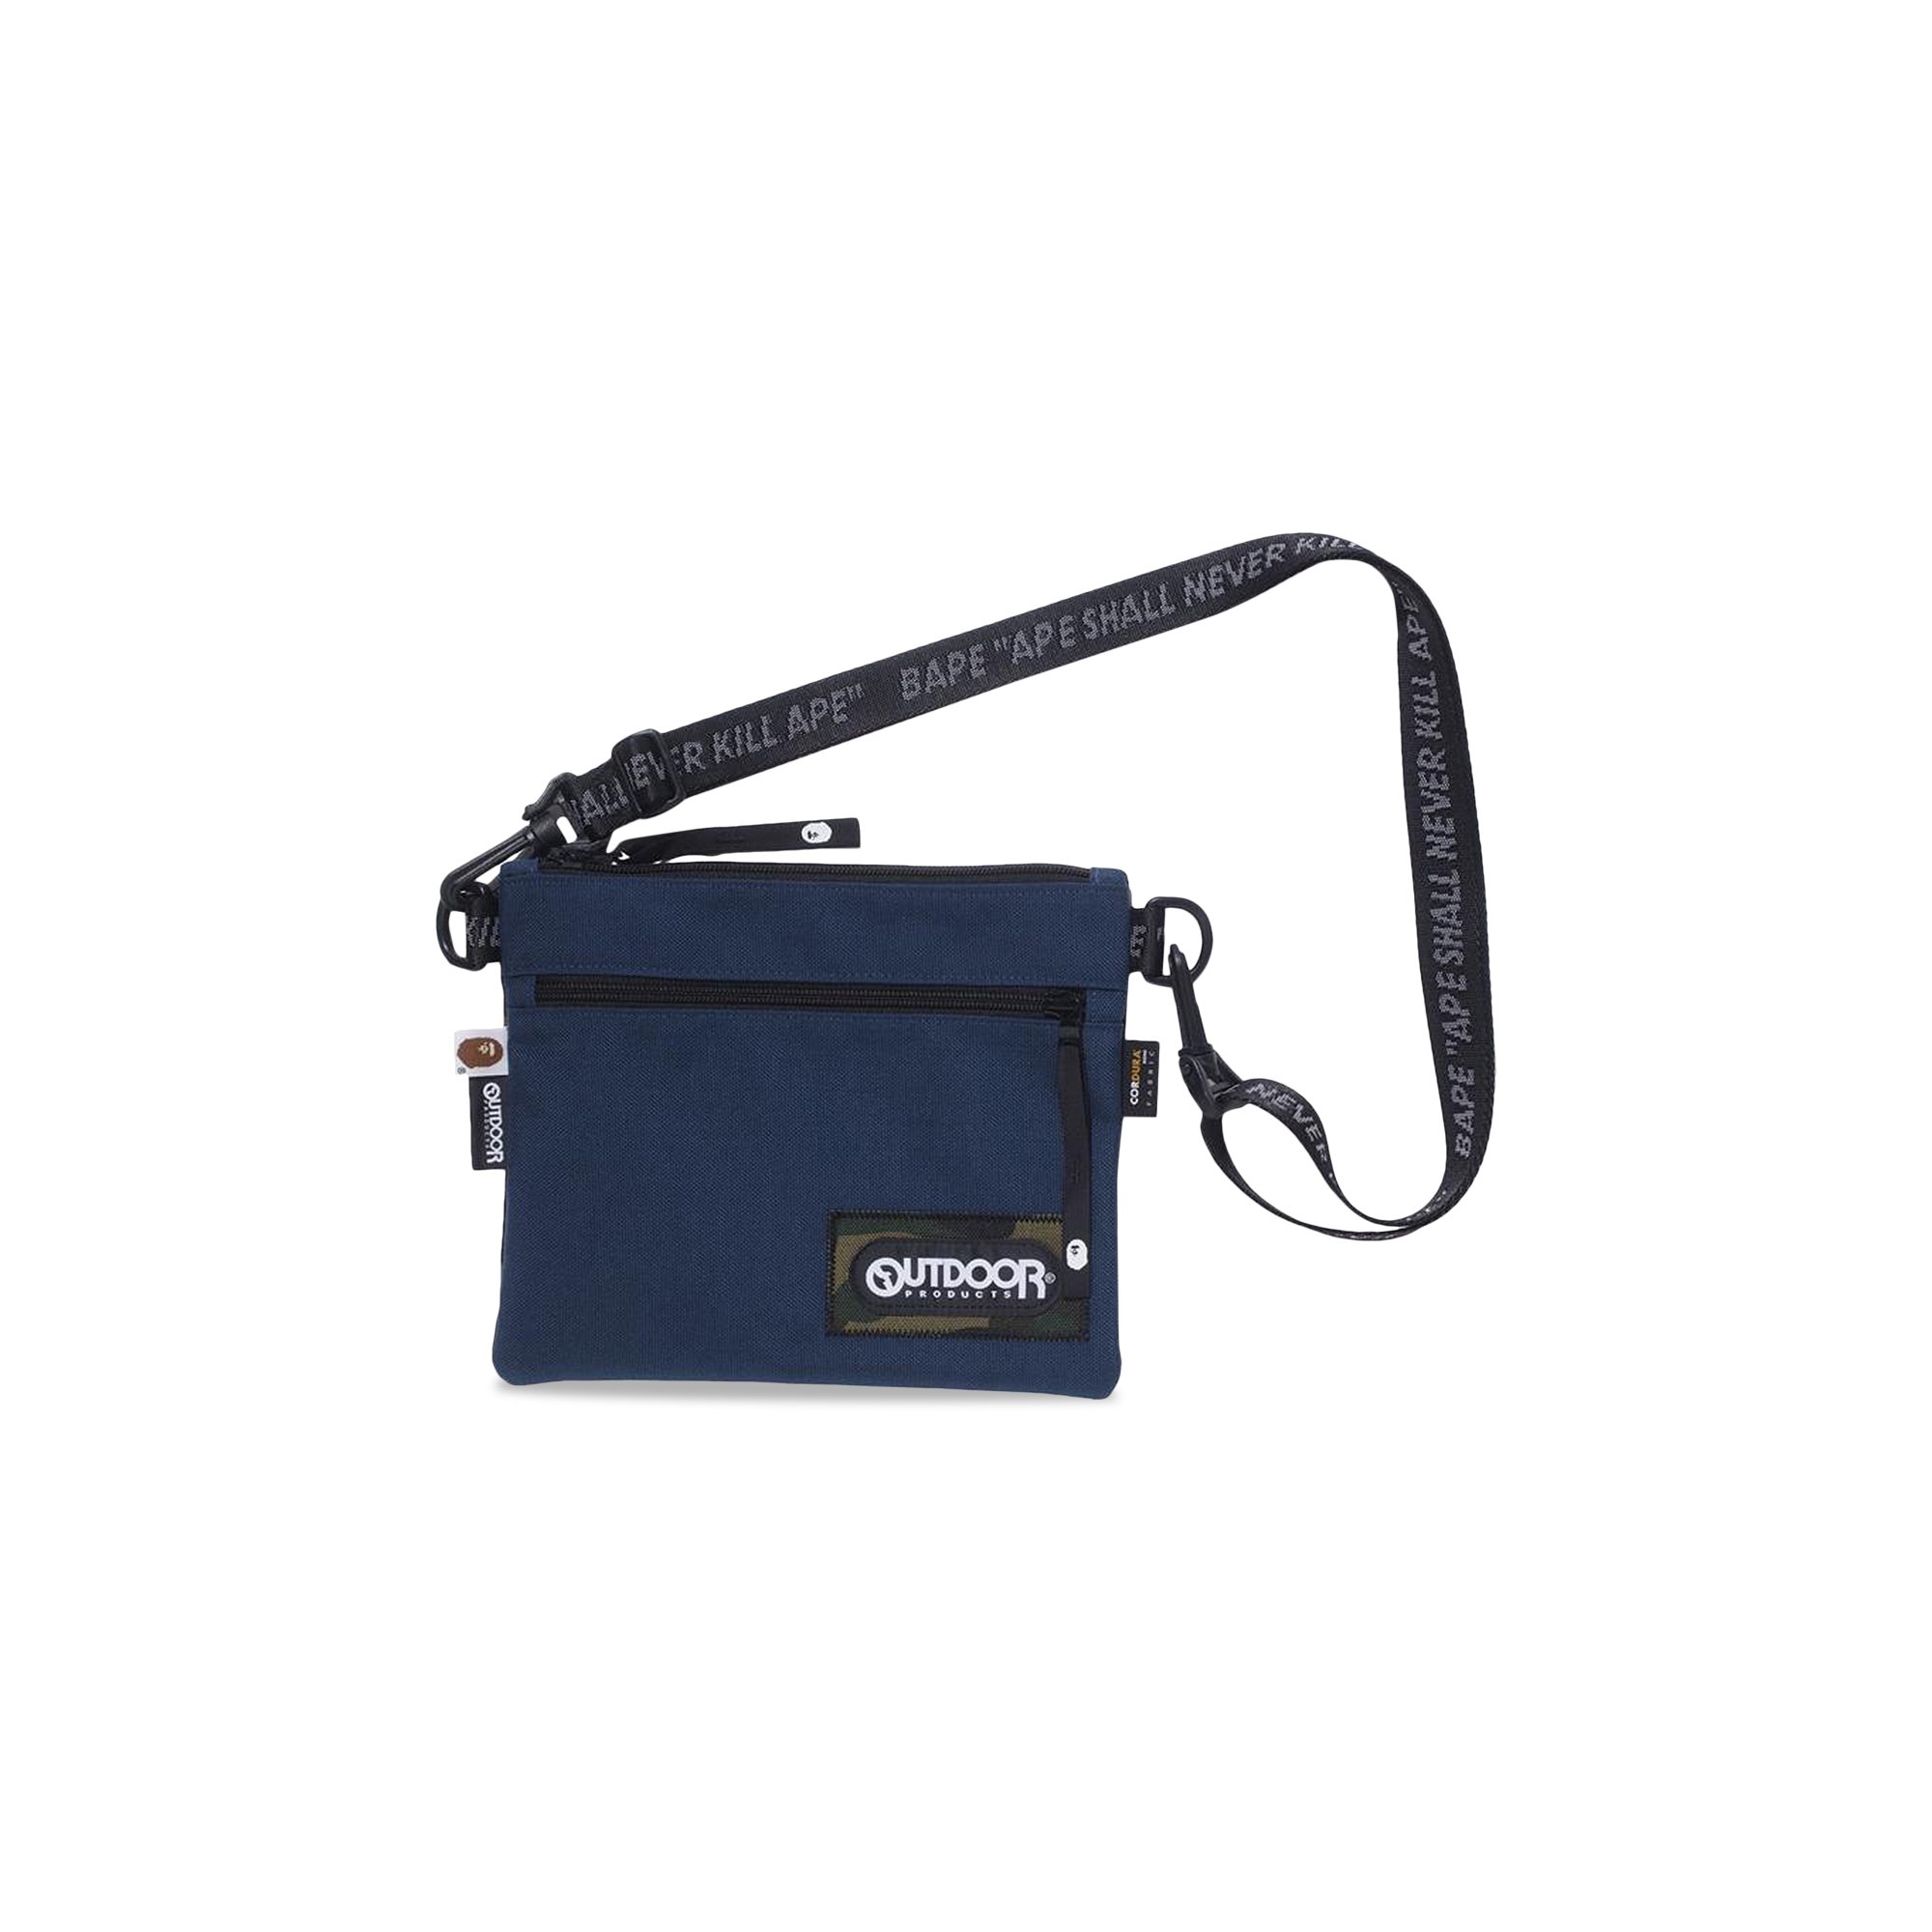 Buy BAPE x Outdoor Products Mini Shoulder Bag 'Navy' - 1F73 182 